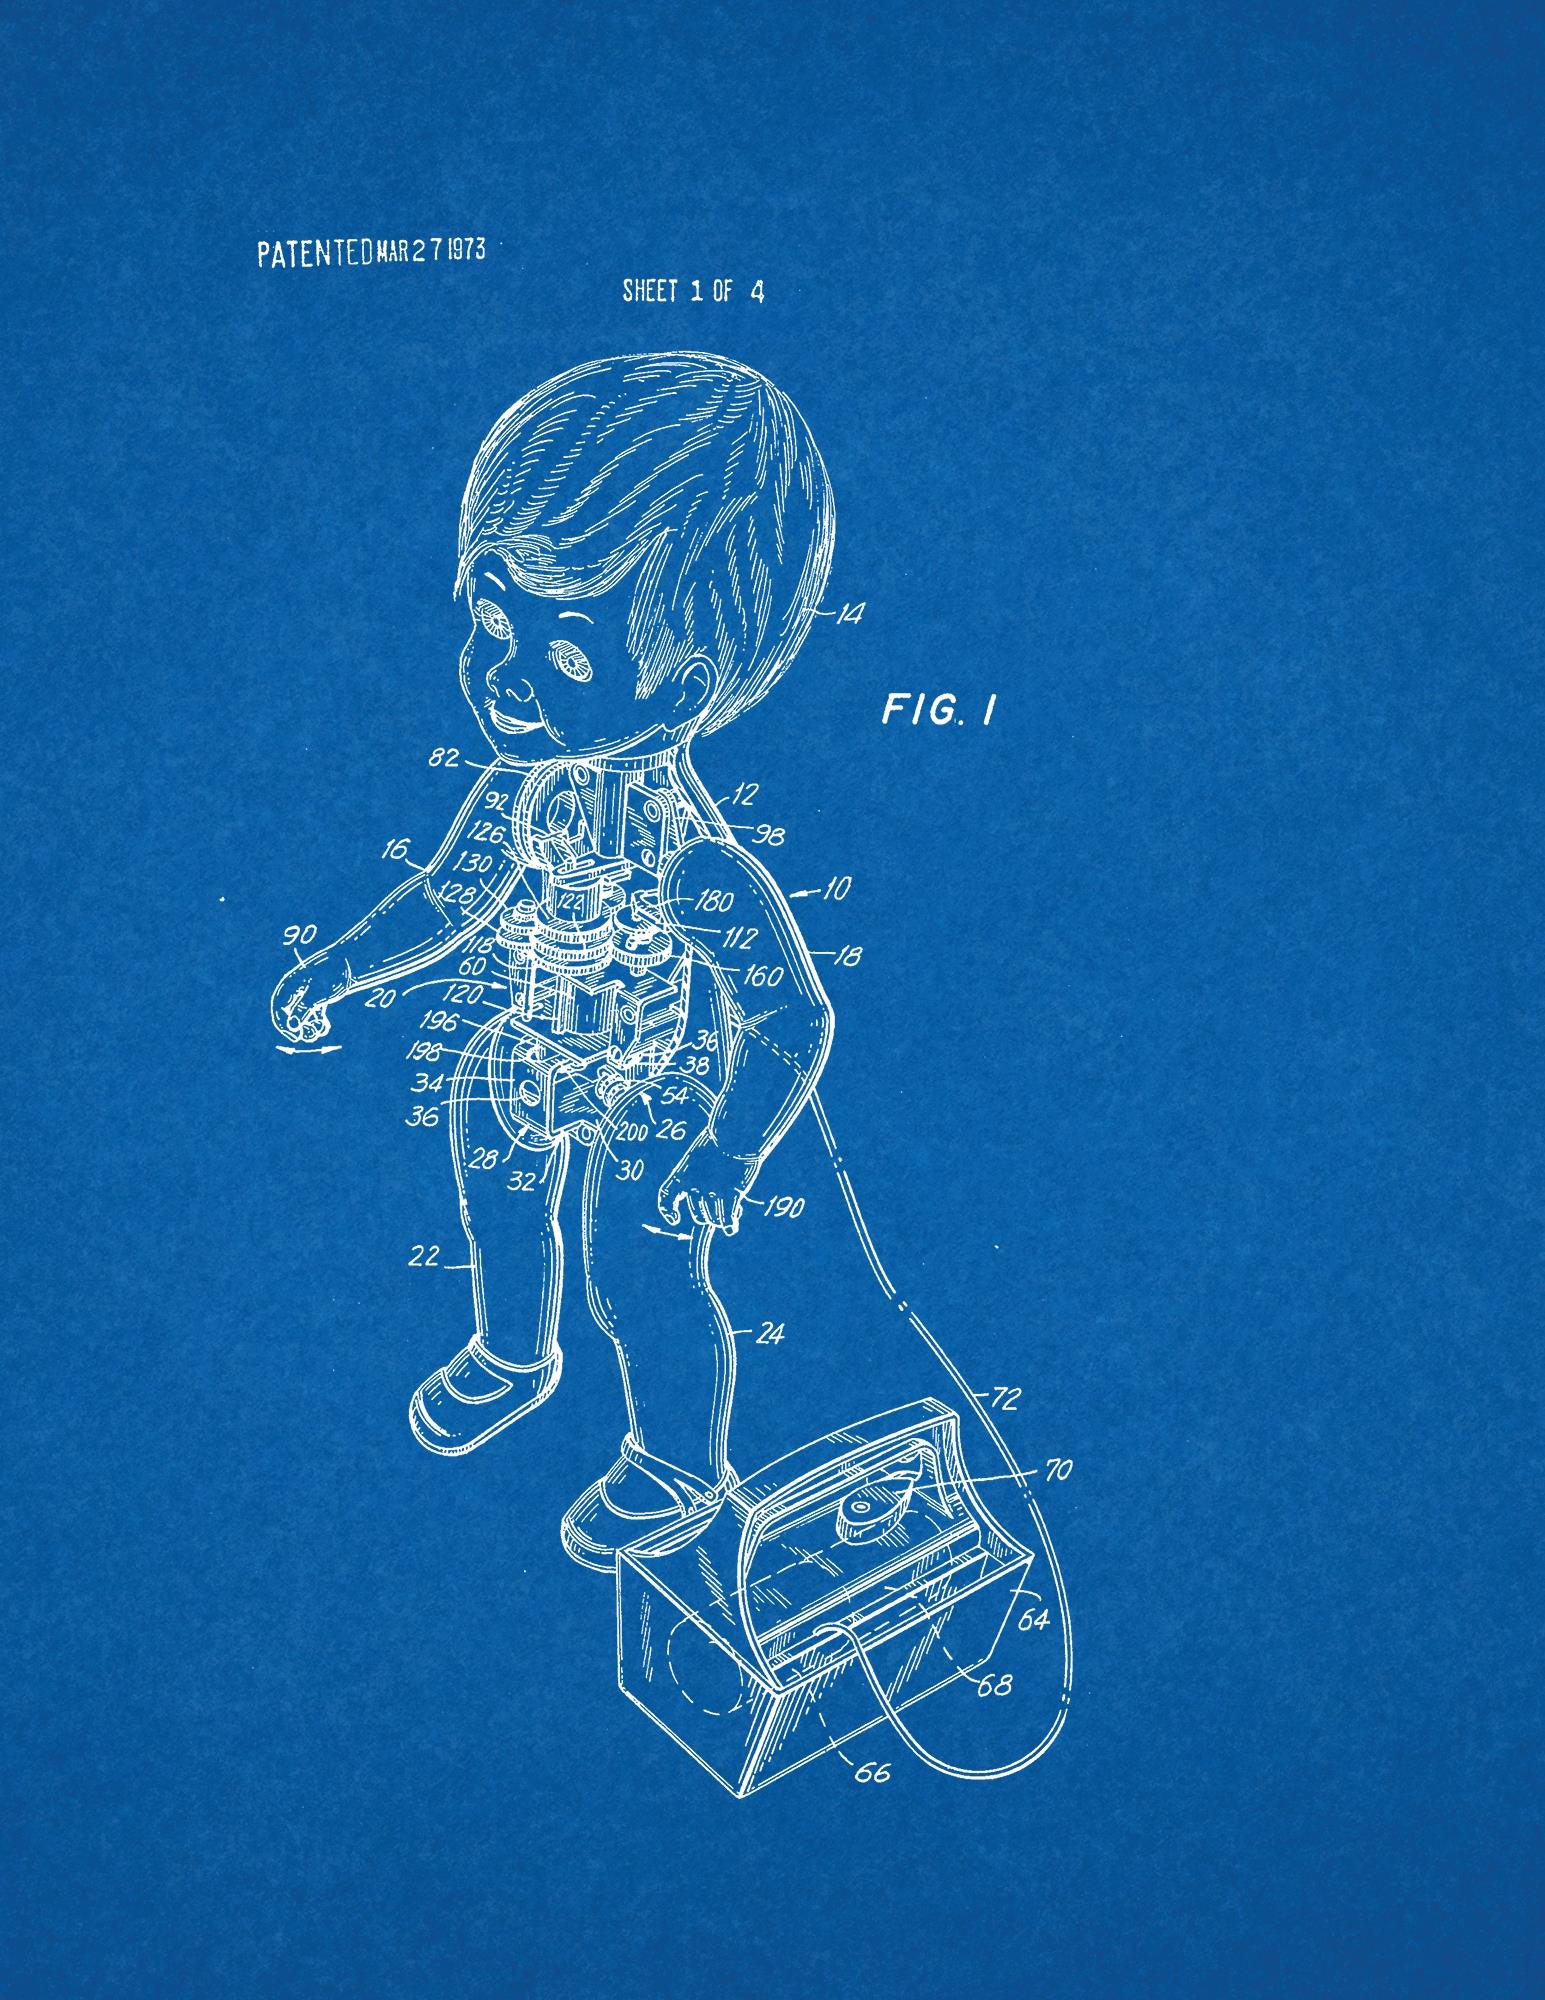 Housekeeping Doll Having Motor Patent Art Blueprint